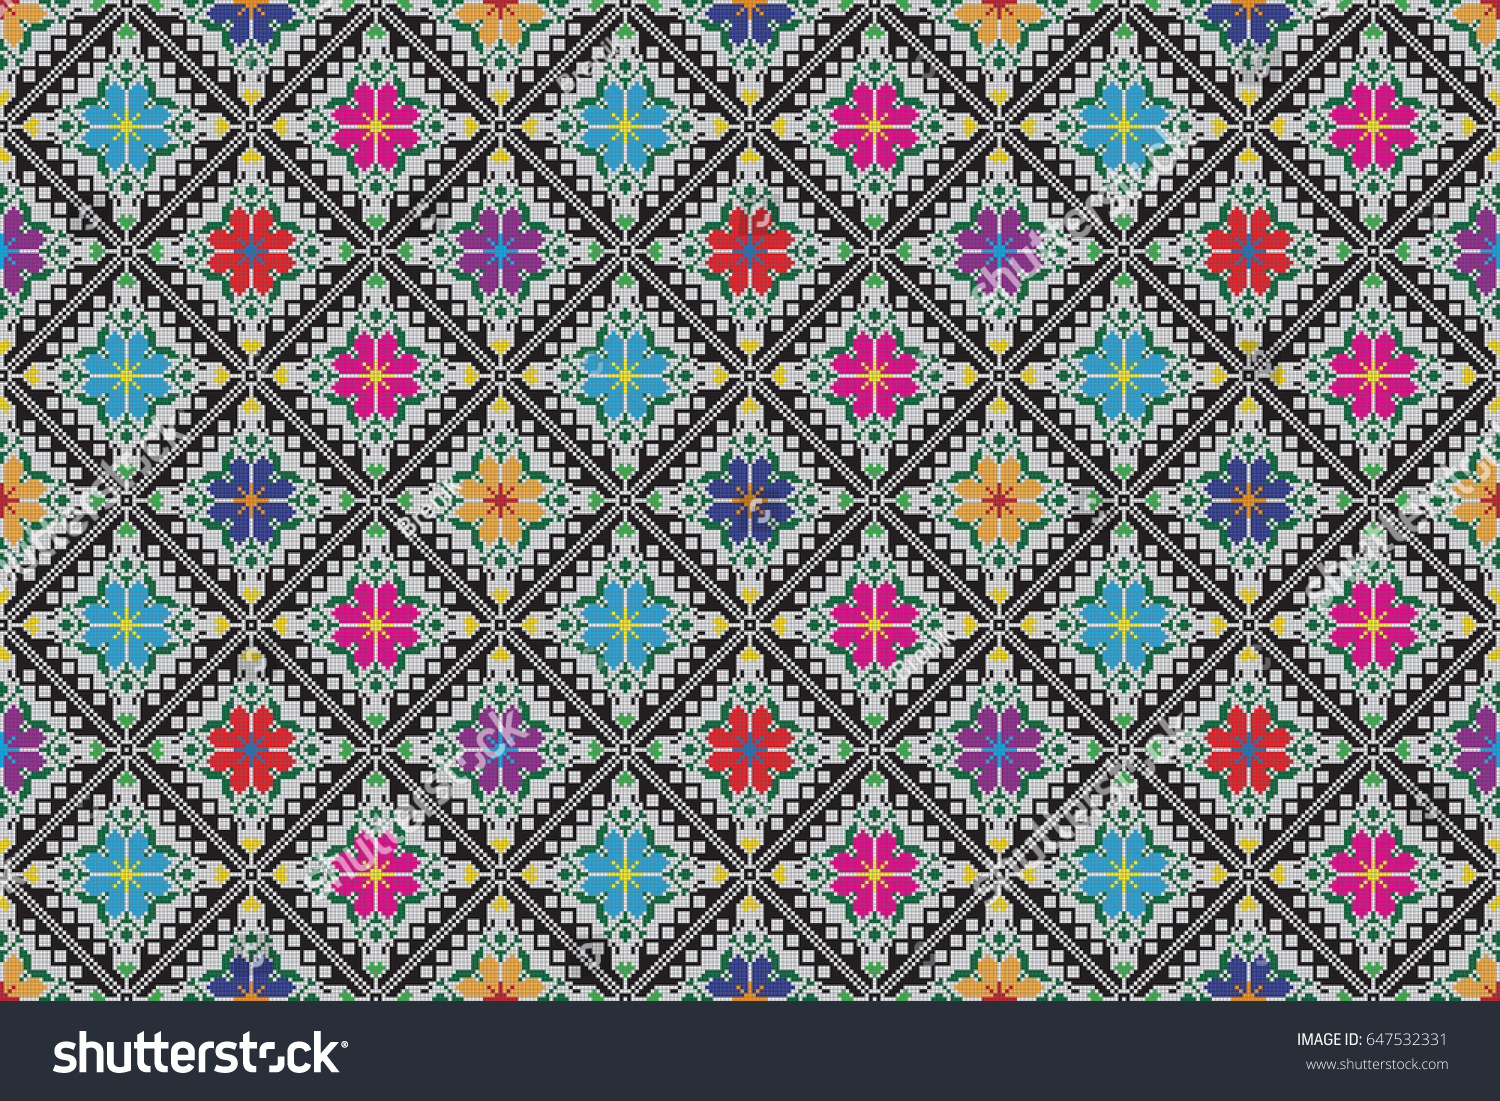 SVG of Traditional Ukrainian folk art knitted embroidery pattern.  svg